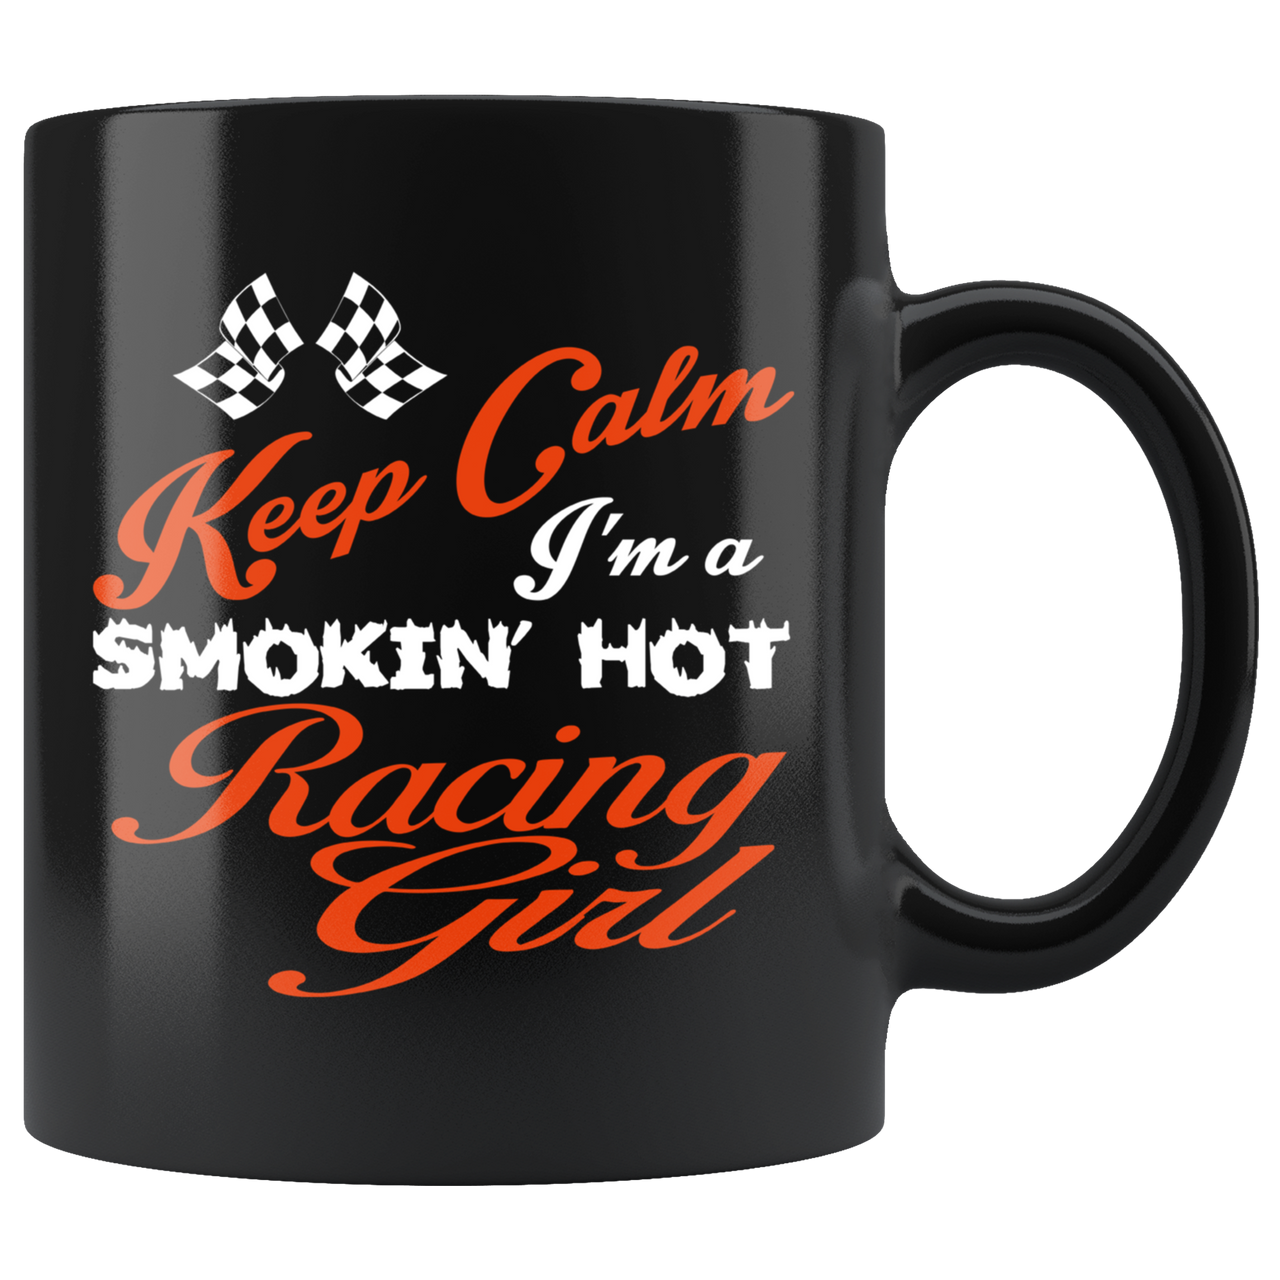 Keep Calm I'm A Smoking Hot Racing Girl Mug!